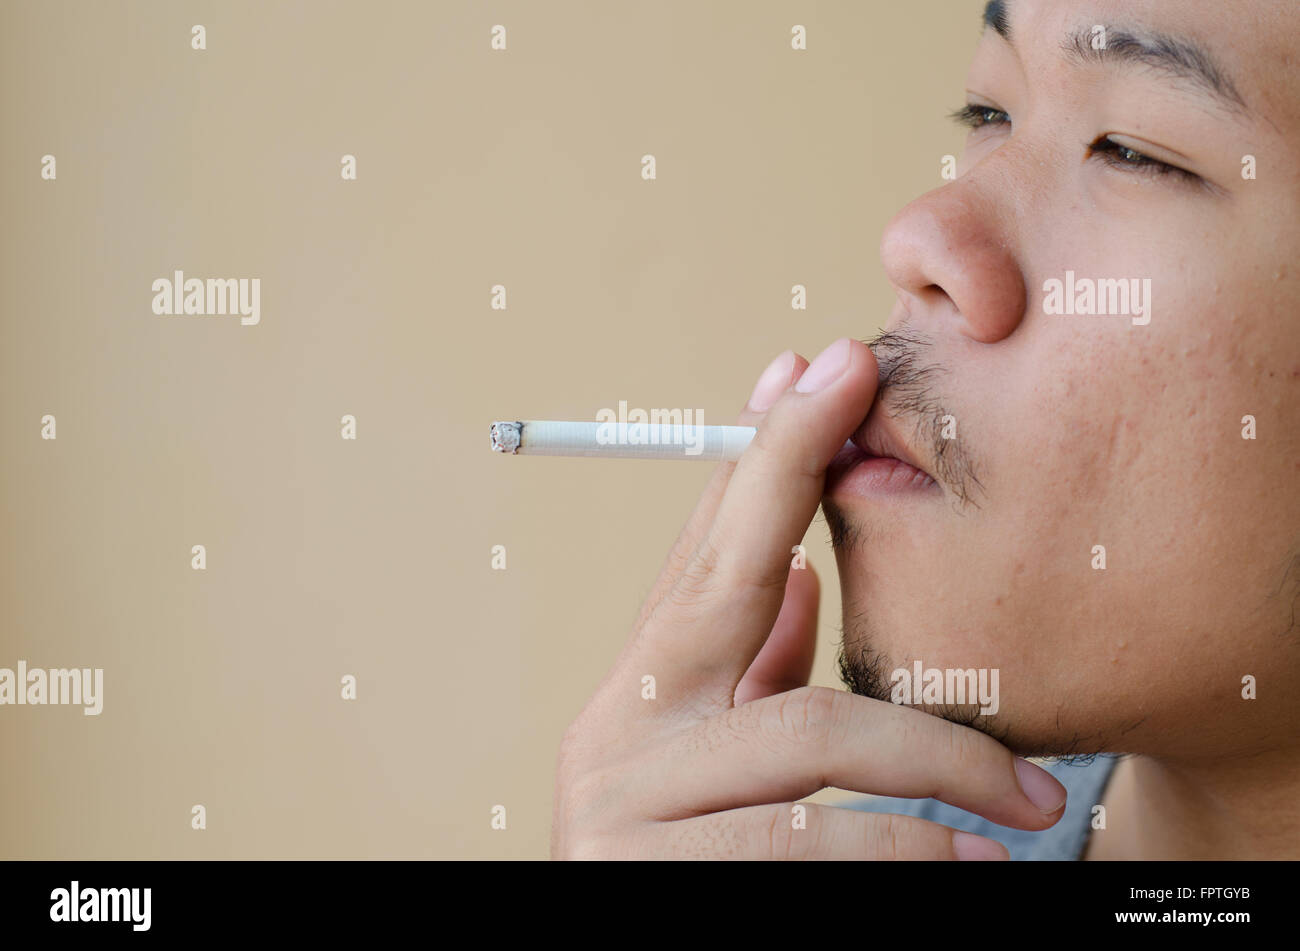 Asian young man smoking cigarette Stock Photo